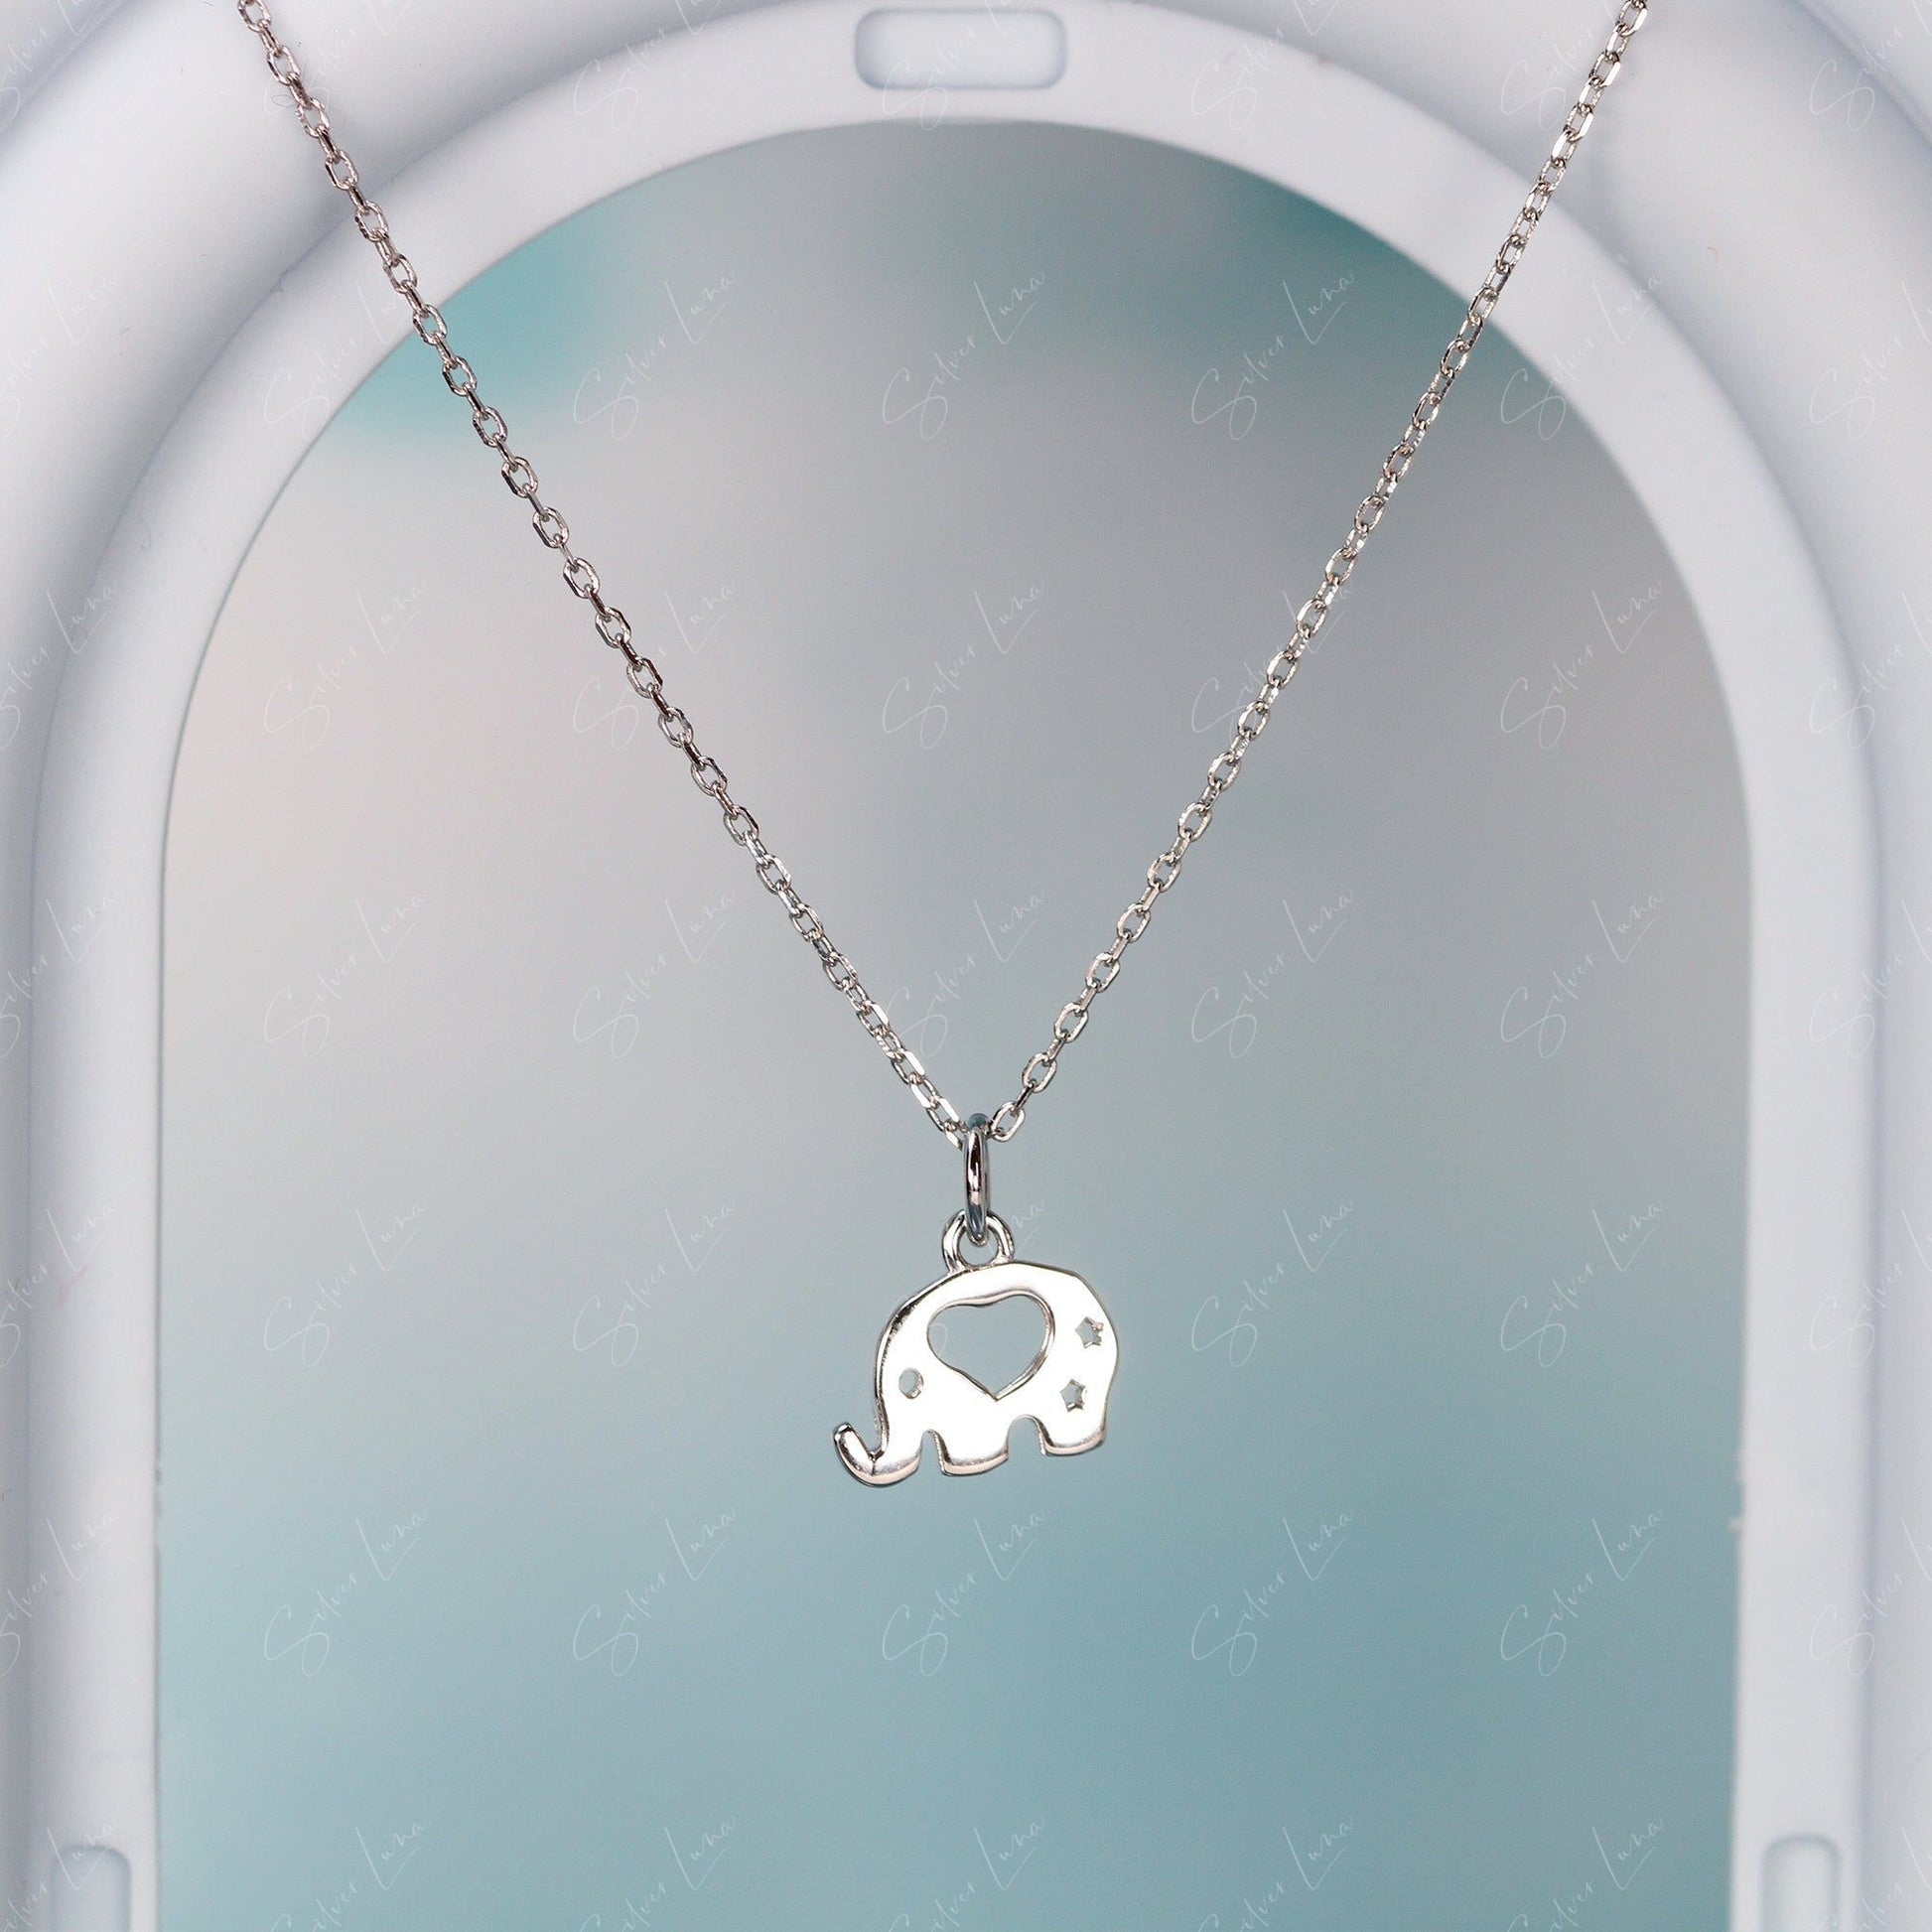 silver elephant pendant necklace